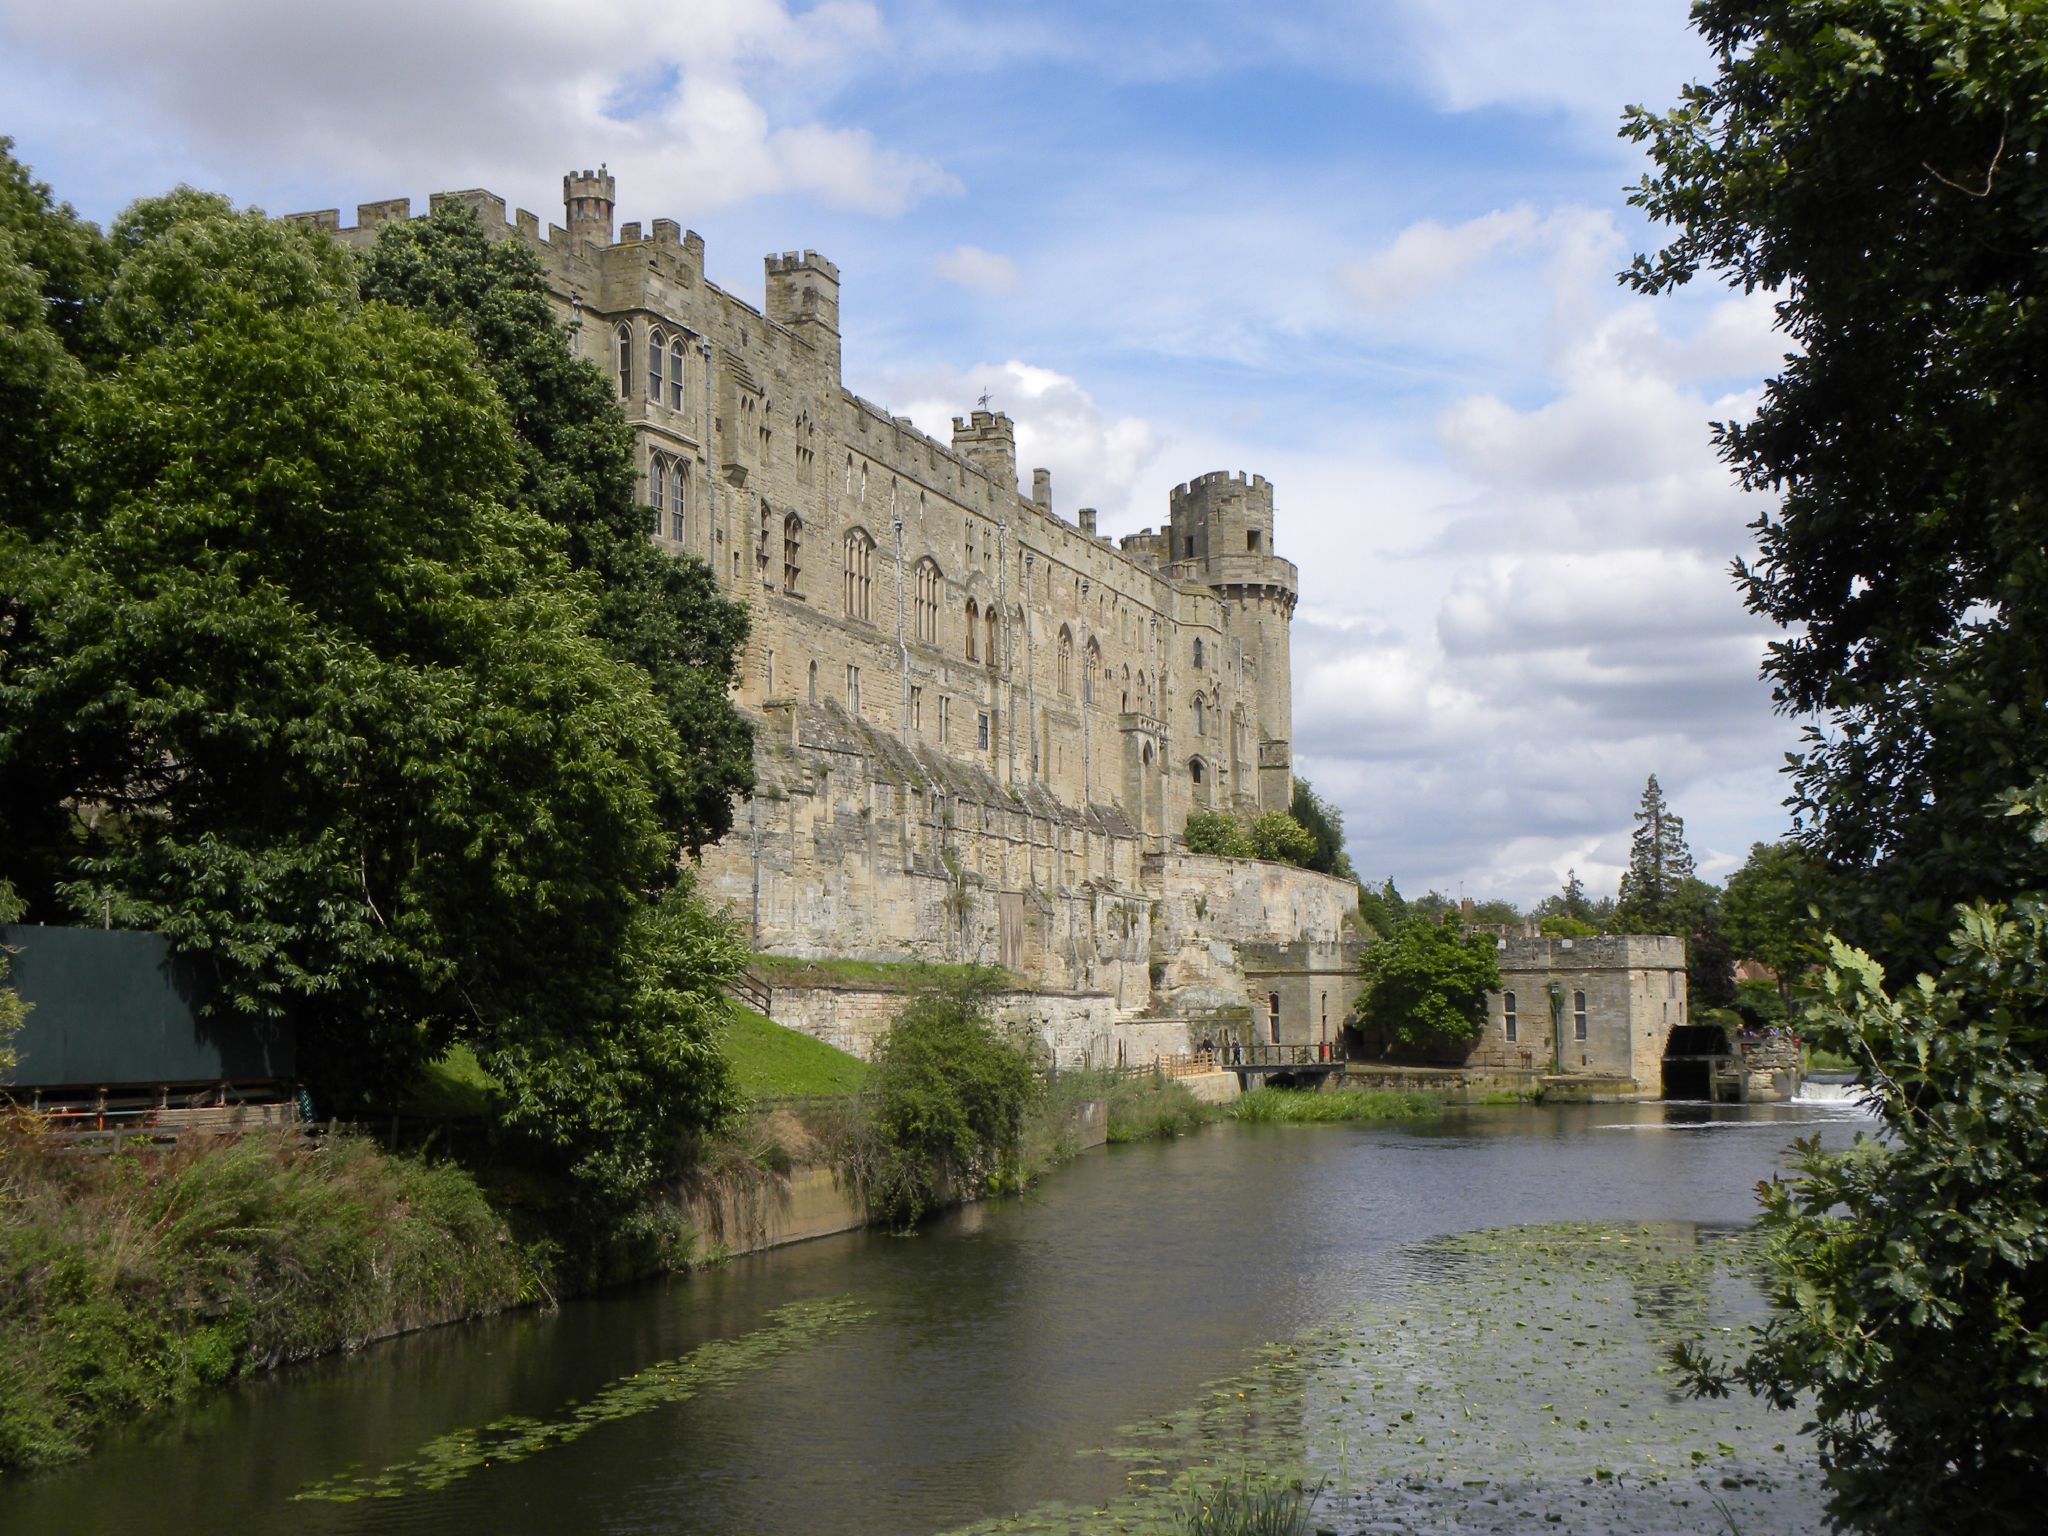 the river runs through to an old castle